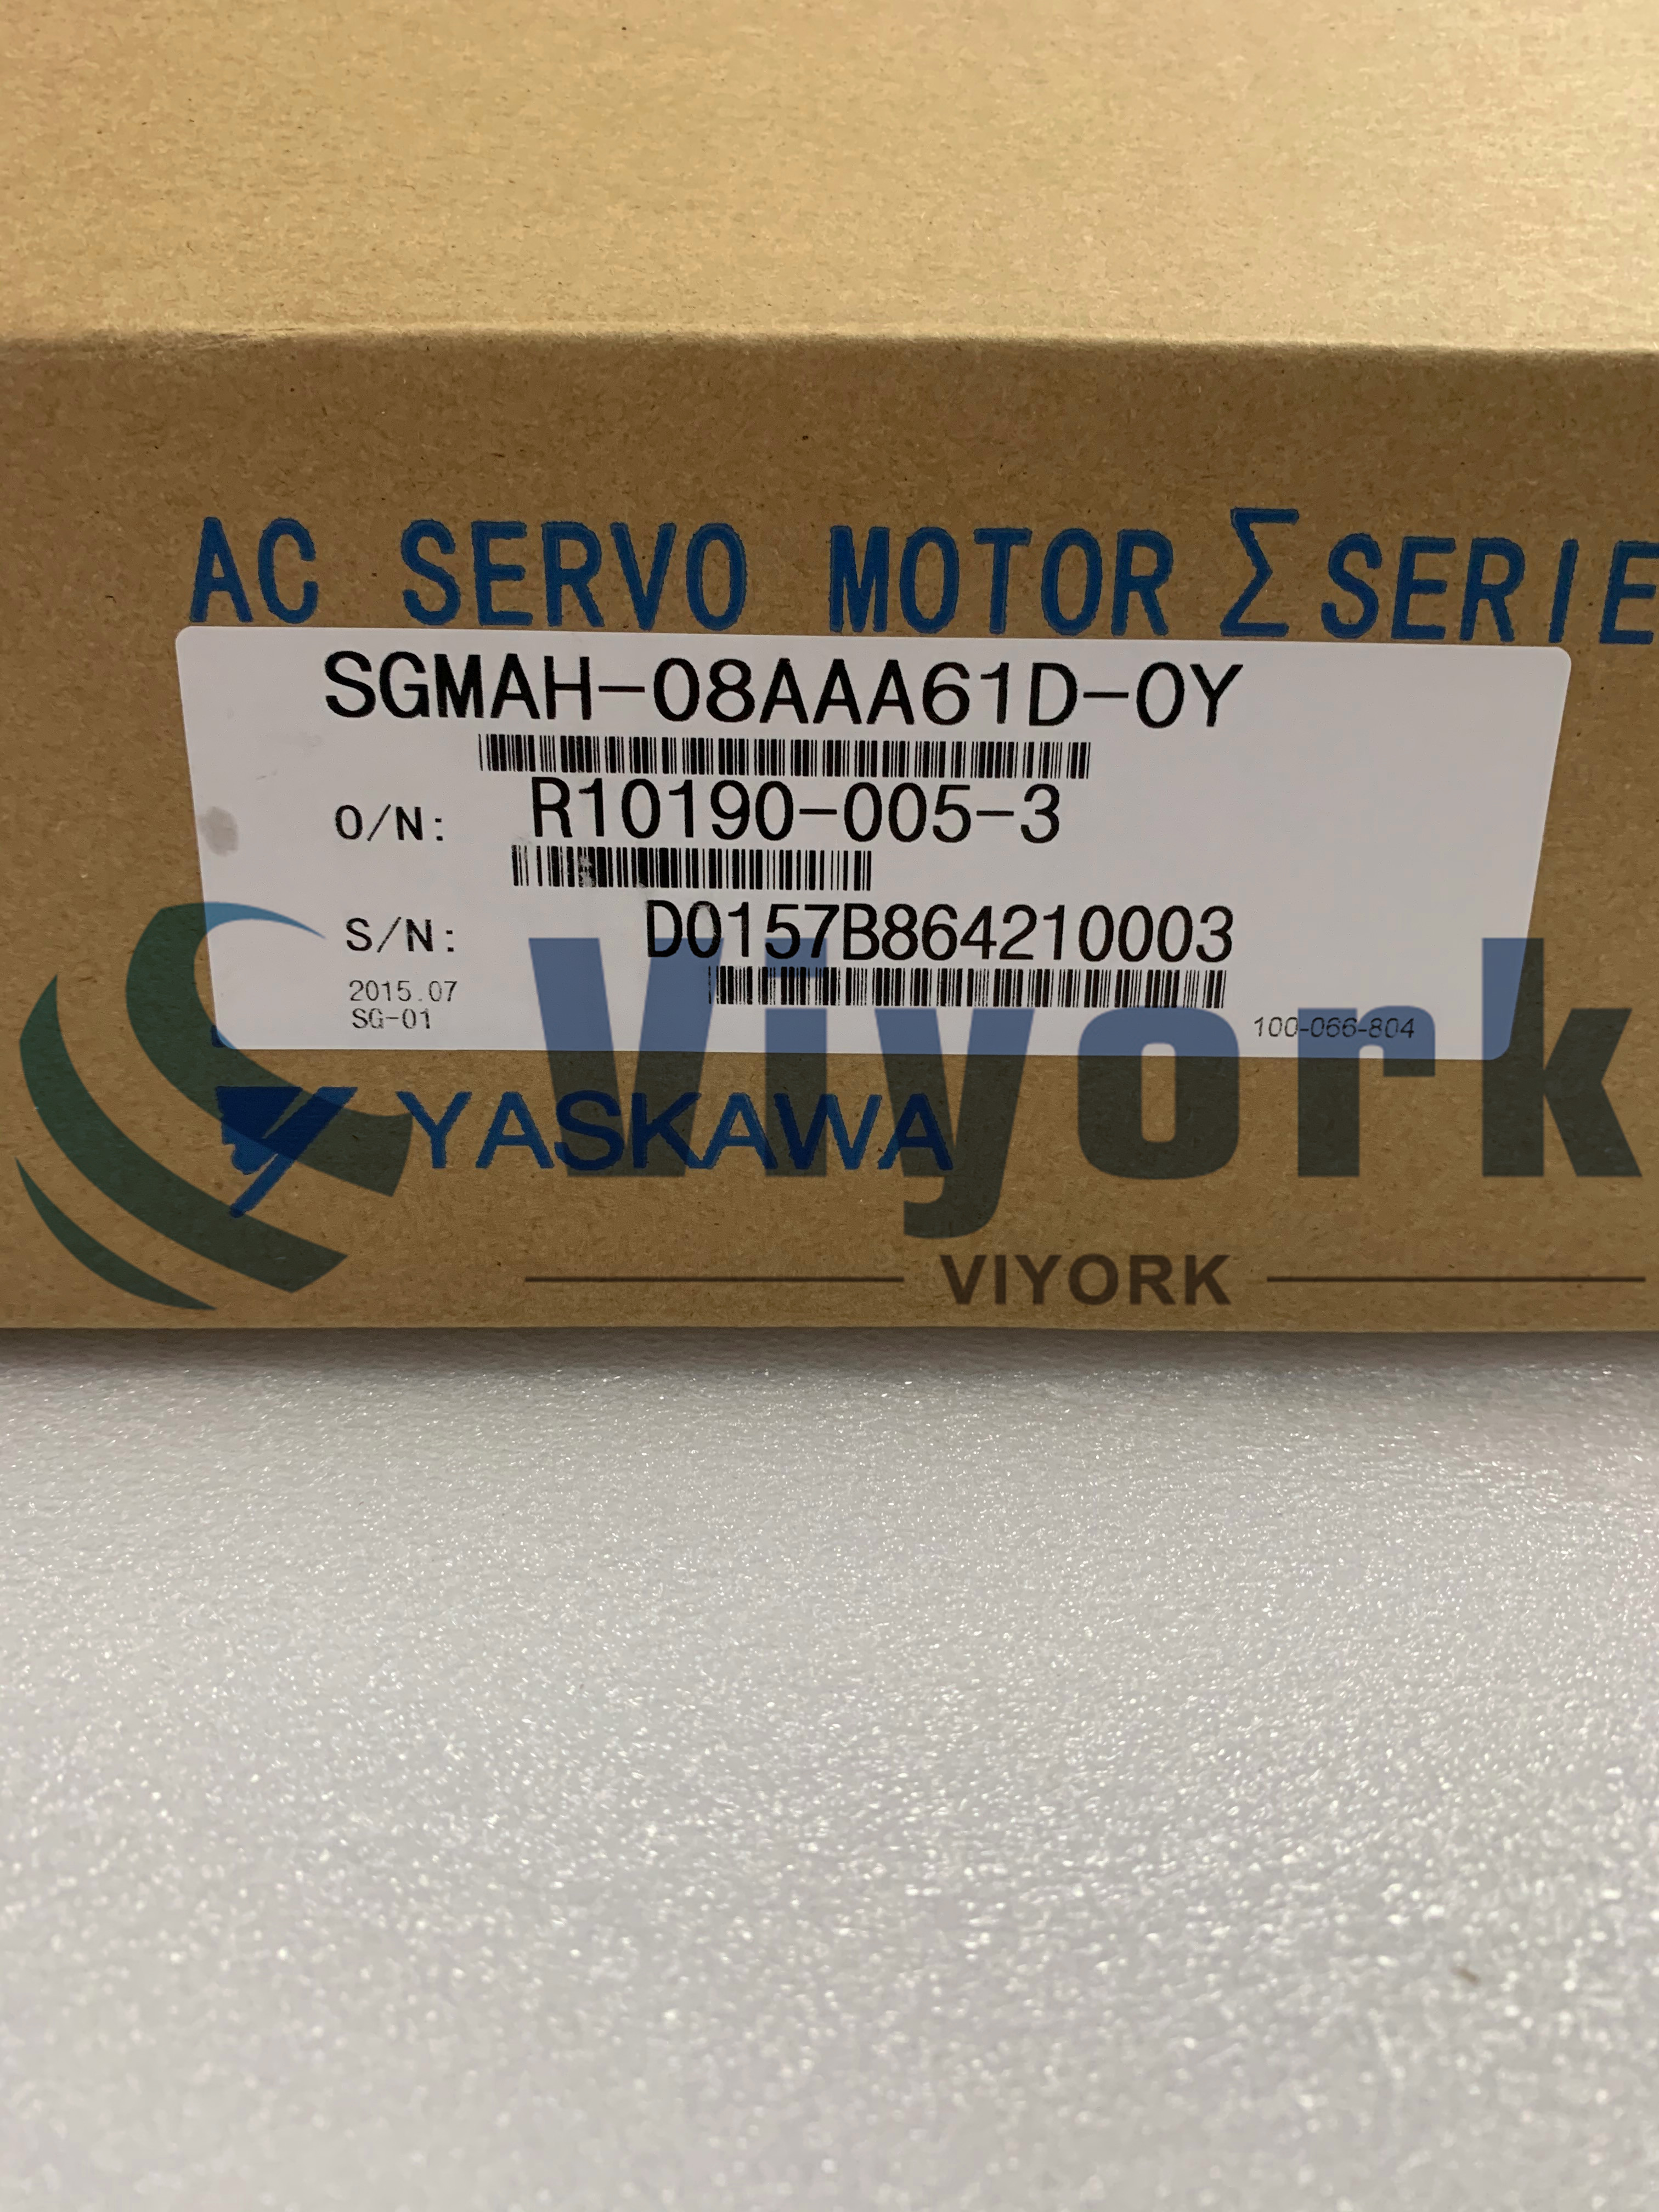 Yaskawa SGMAH-08AAA61D-OY AC SERVO MOTOR 750 WATT 3.39 NM NEW